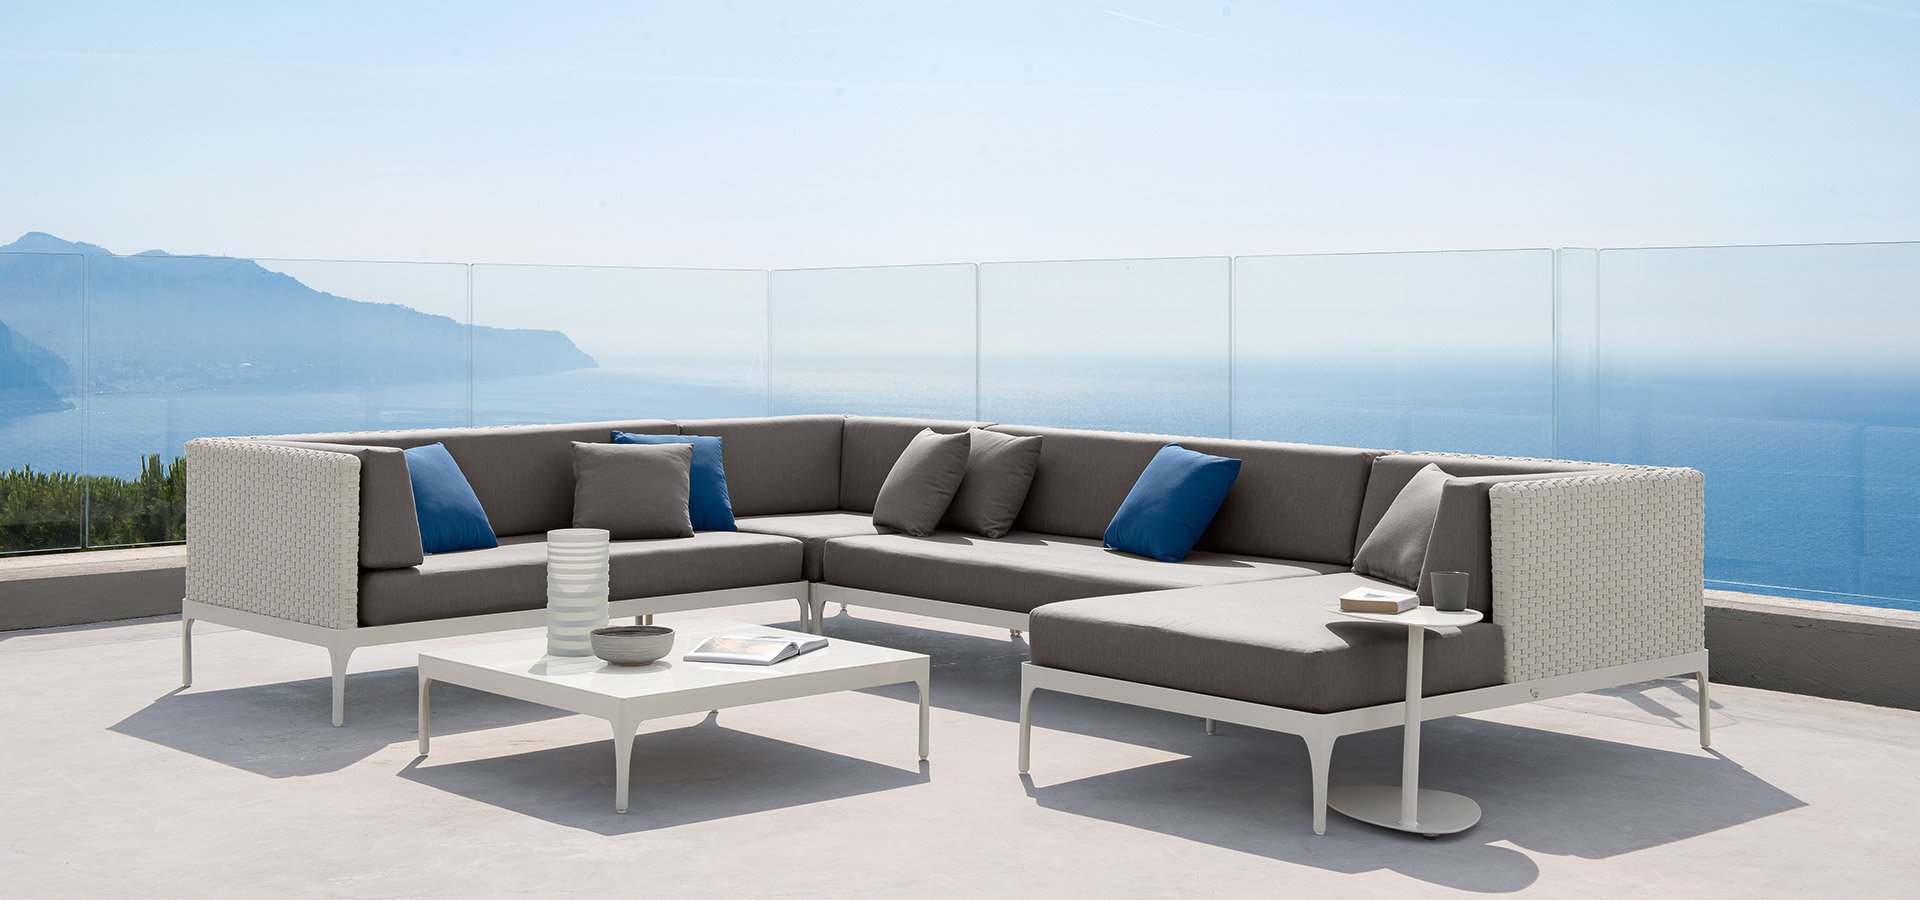 Infinity Sofa from Ethimo, designed by Ethimo Studio